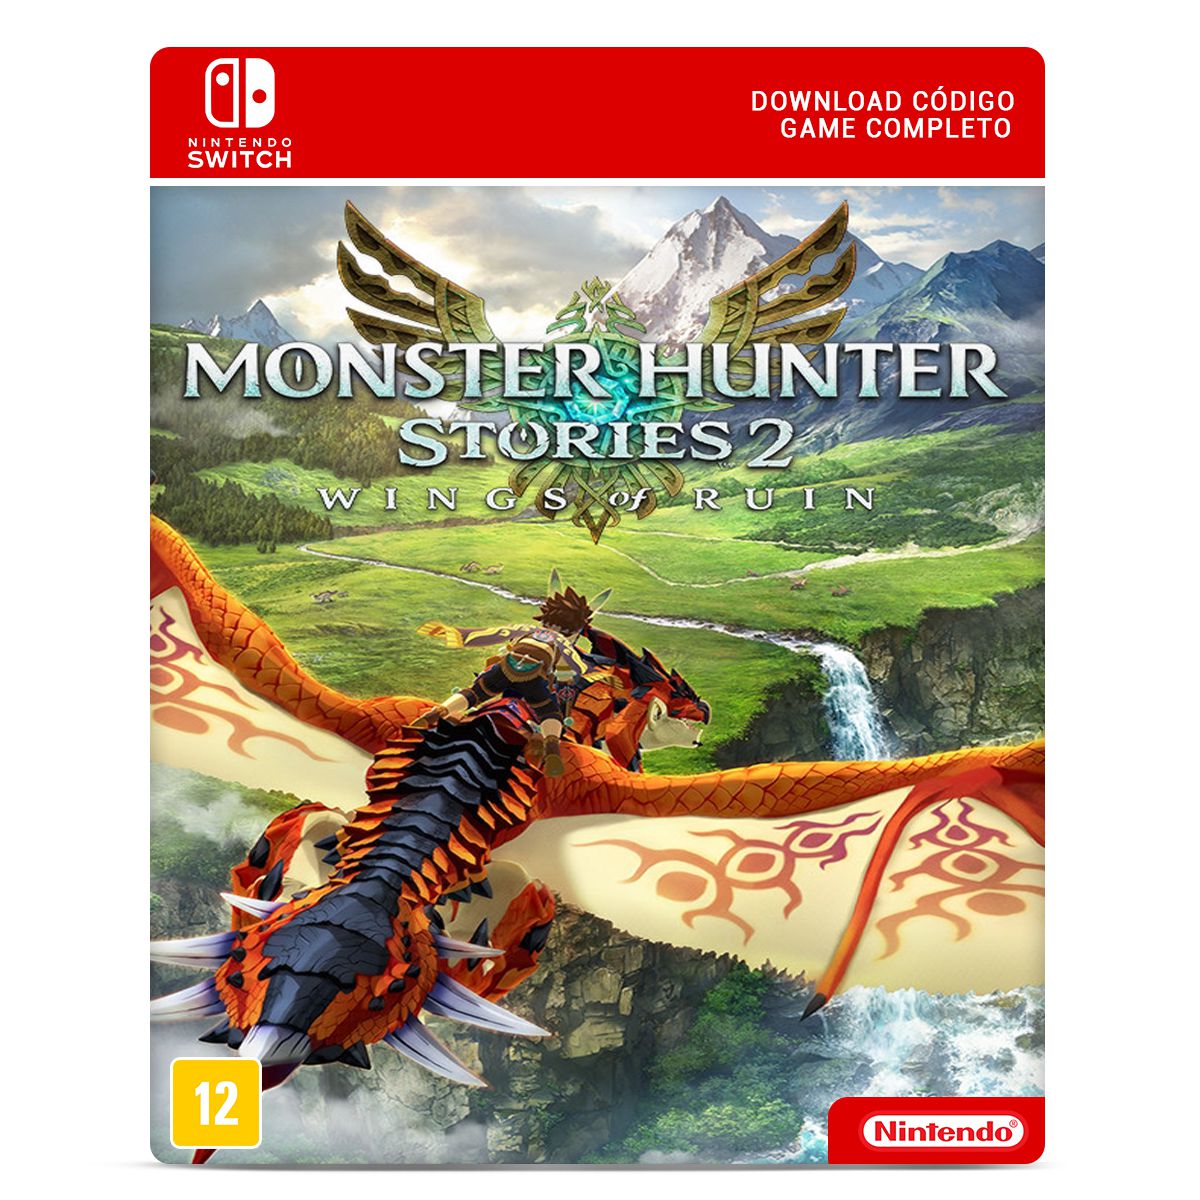 Monster Hunter Rise (PC/Switch): os dez monstros mais legais